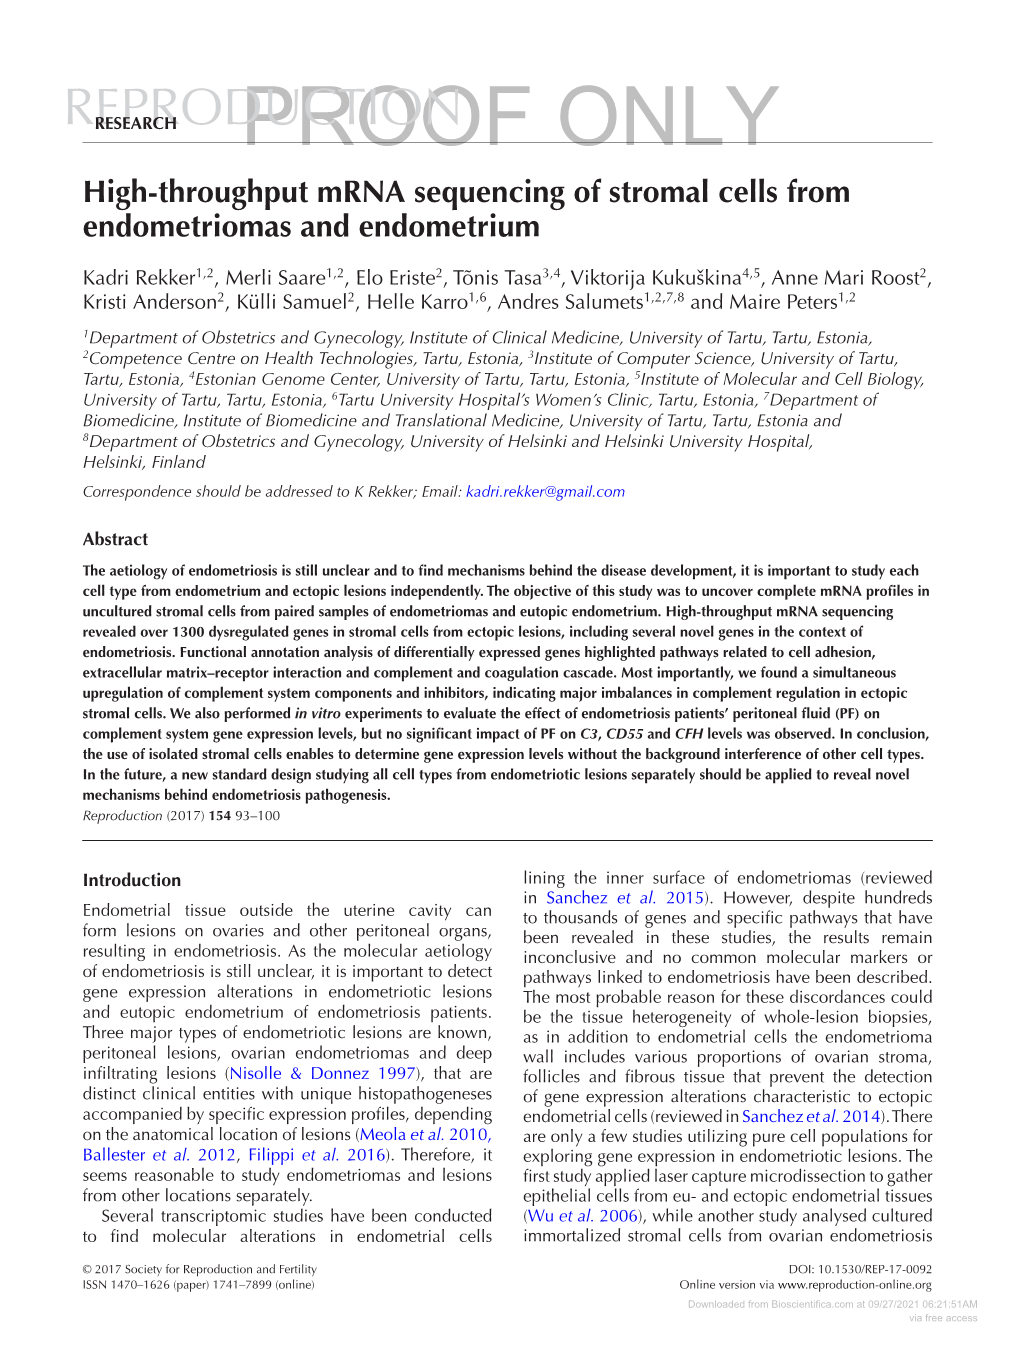 High-Throughput Mrna Sequencing of Stromal Cells from Endometriomas and Endometrium